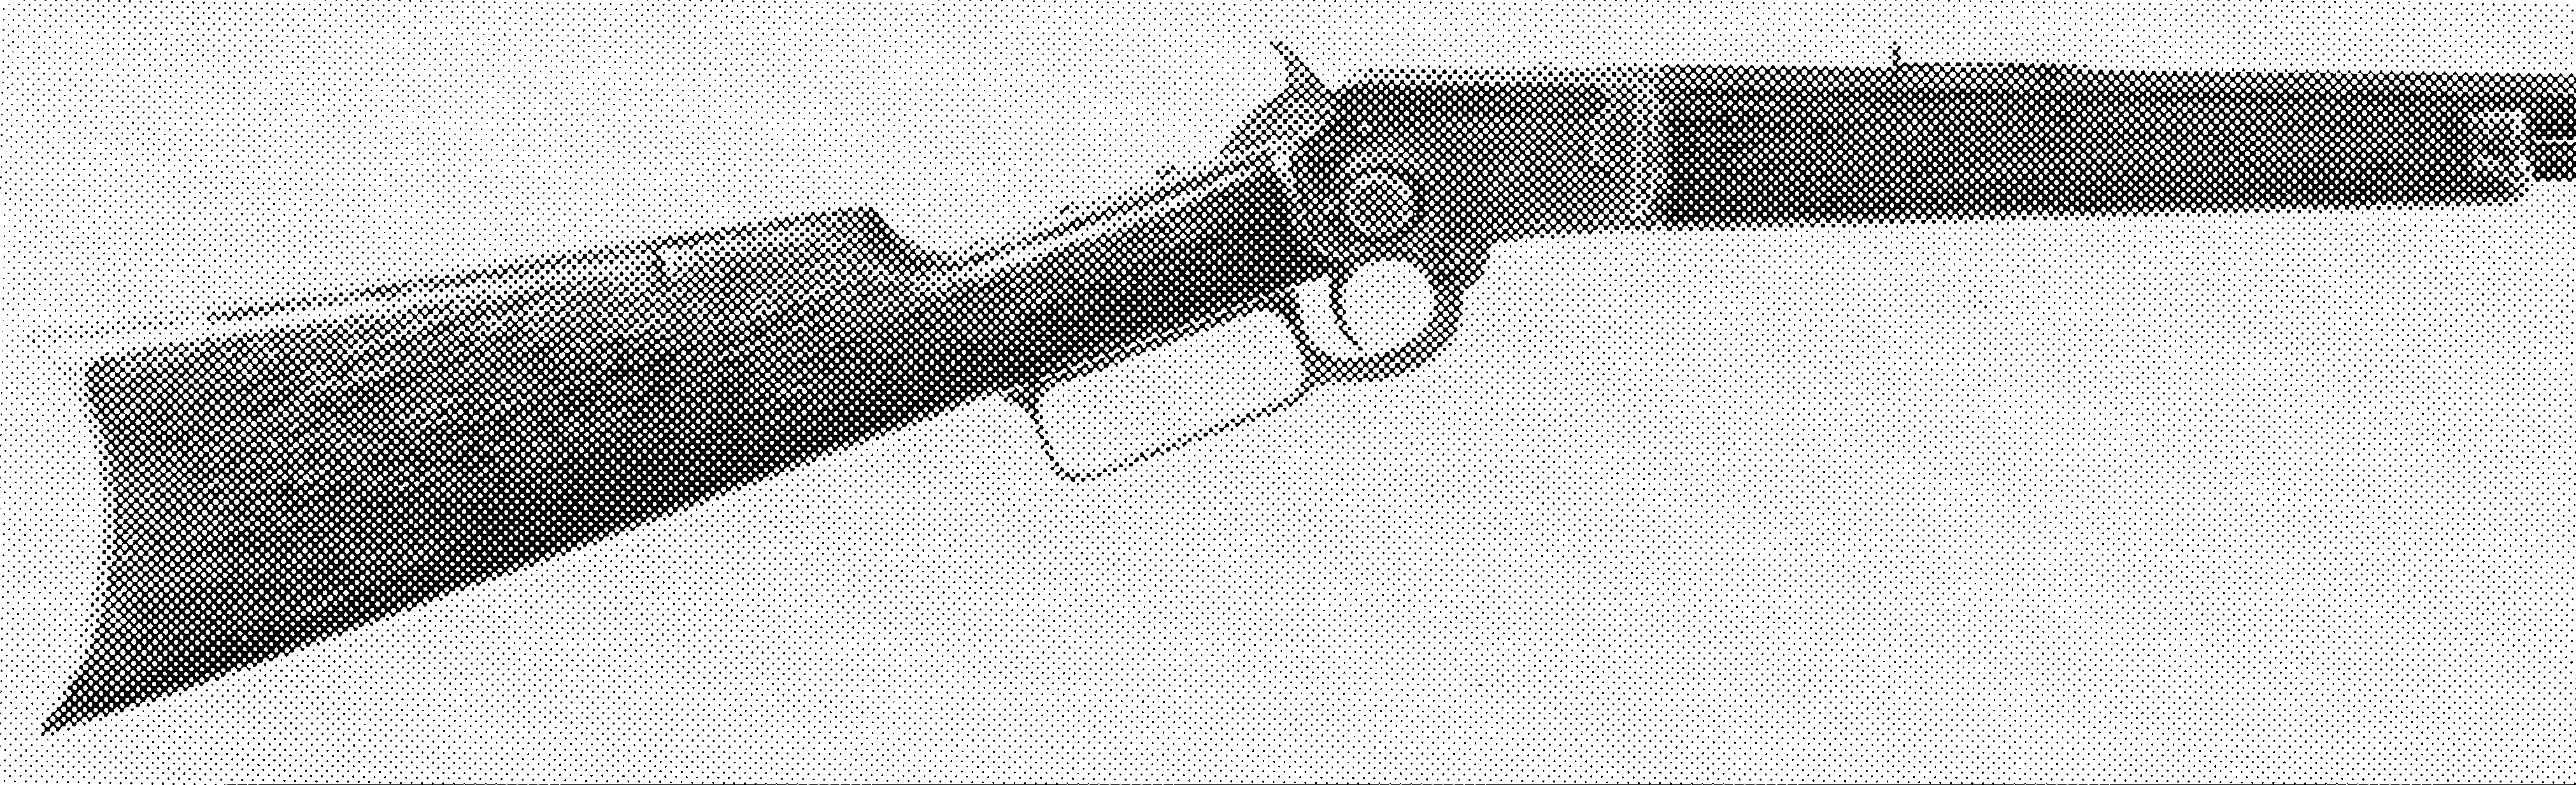 Standard Production Rifle